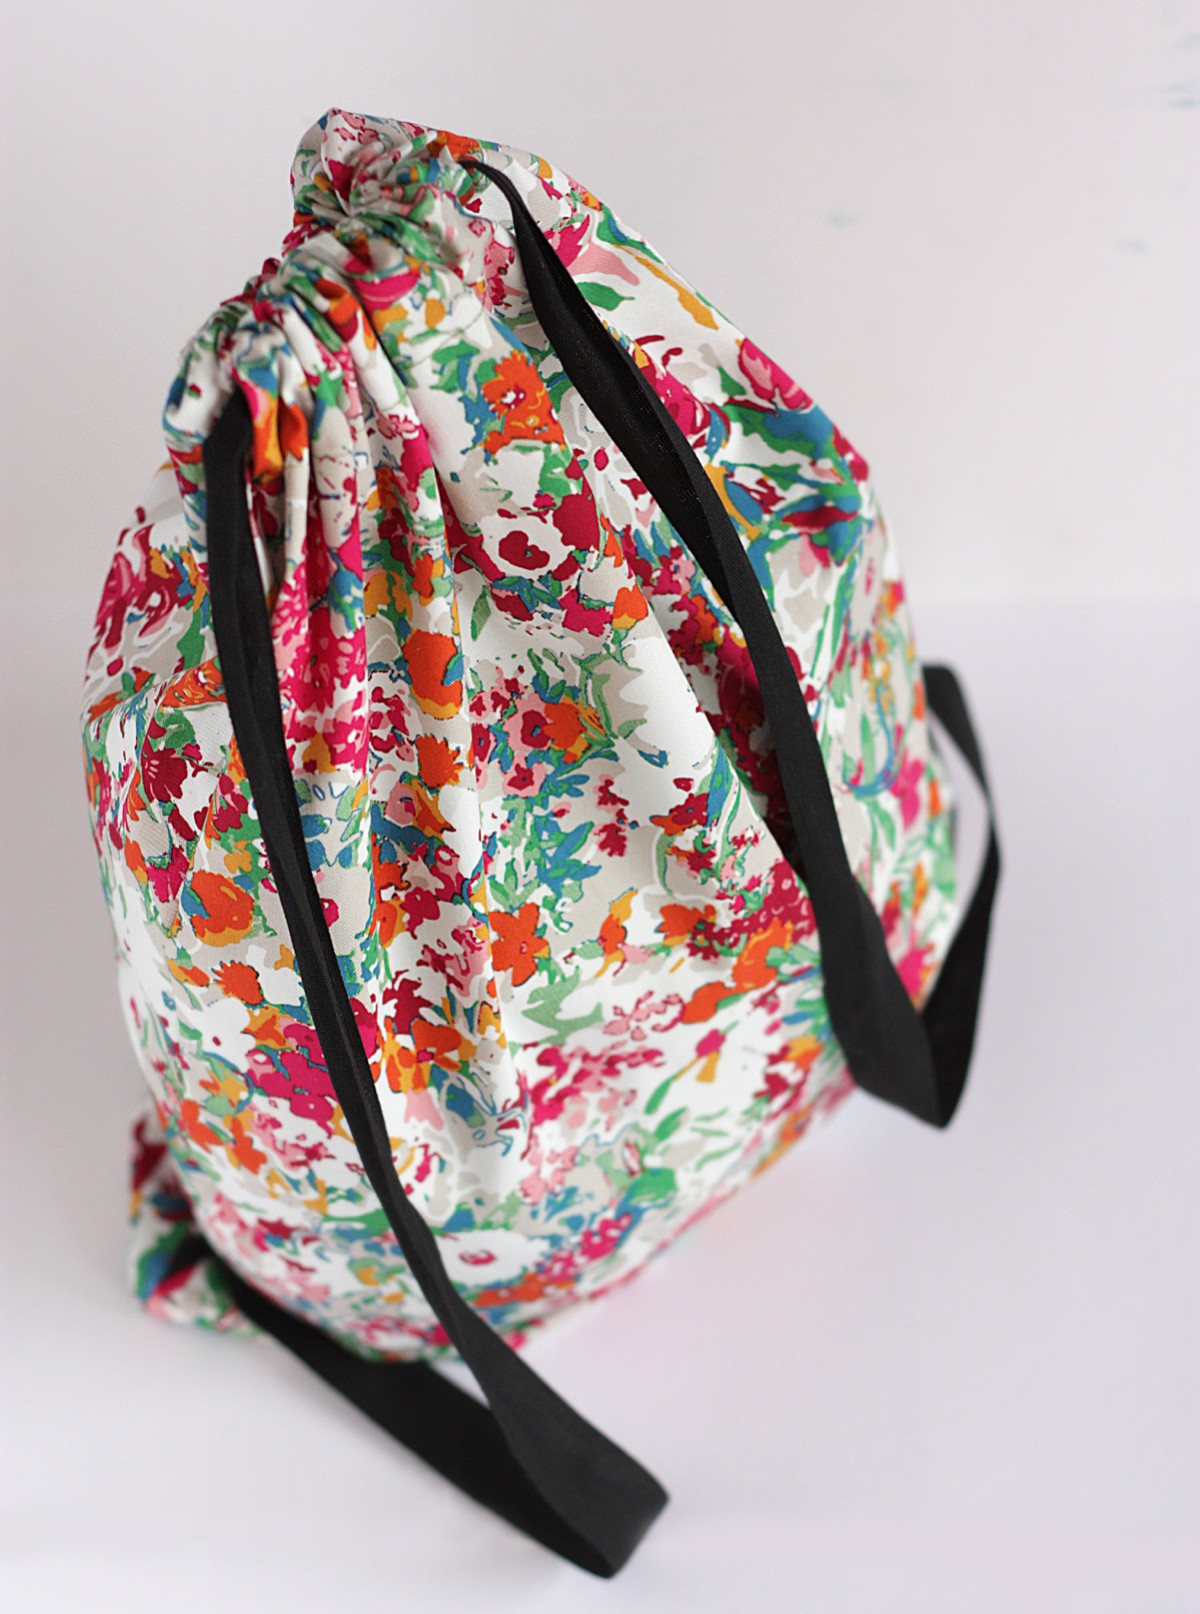 Best ideas about DIY Drawstring Bag
. Save or Pin DIY Drawstring Backpack Now.